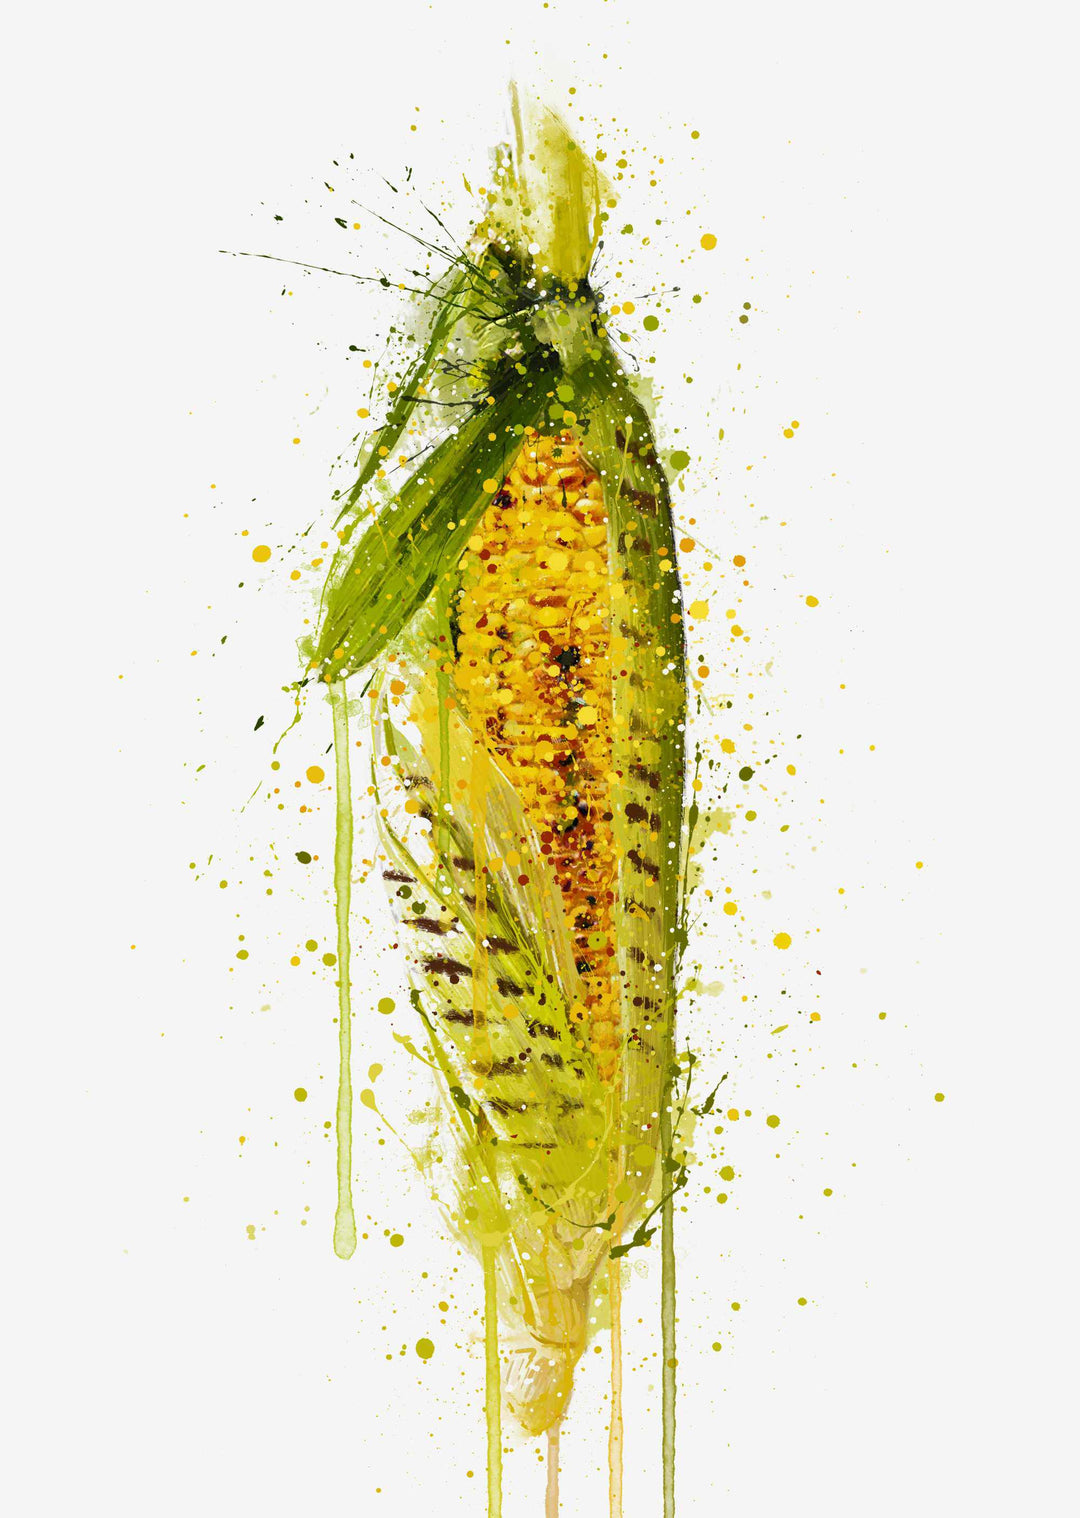 Gegrillter Mais-Gemüse-Wand-Kunstdruck